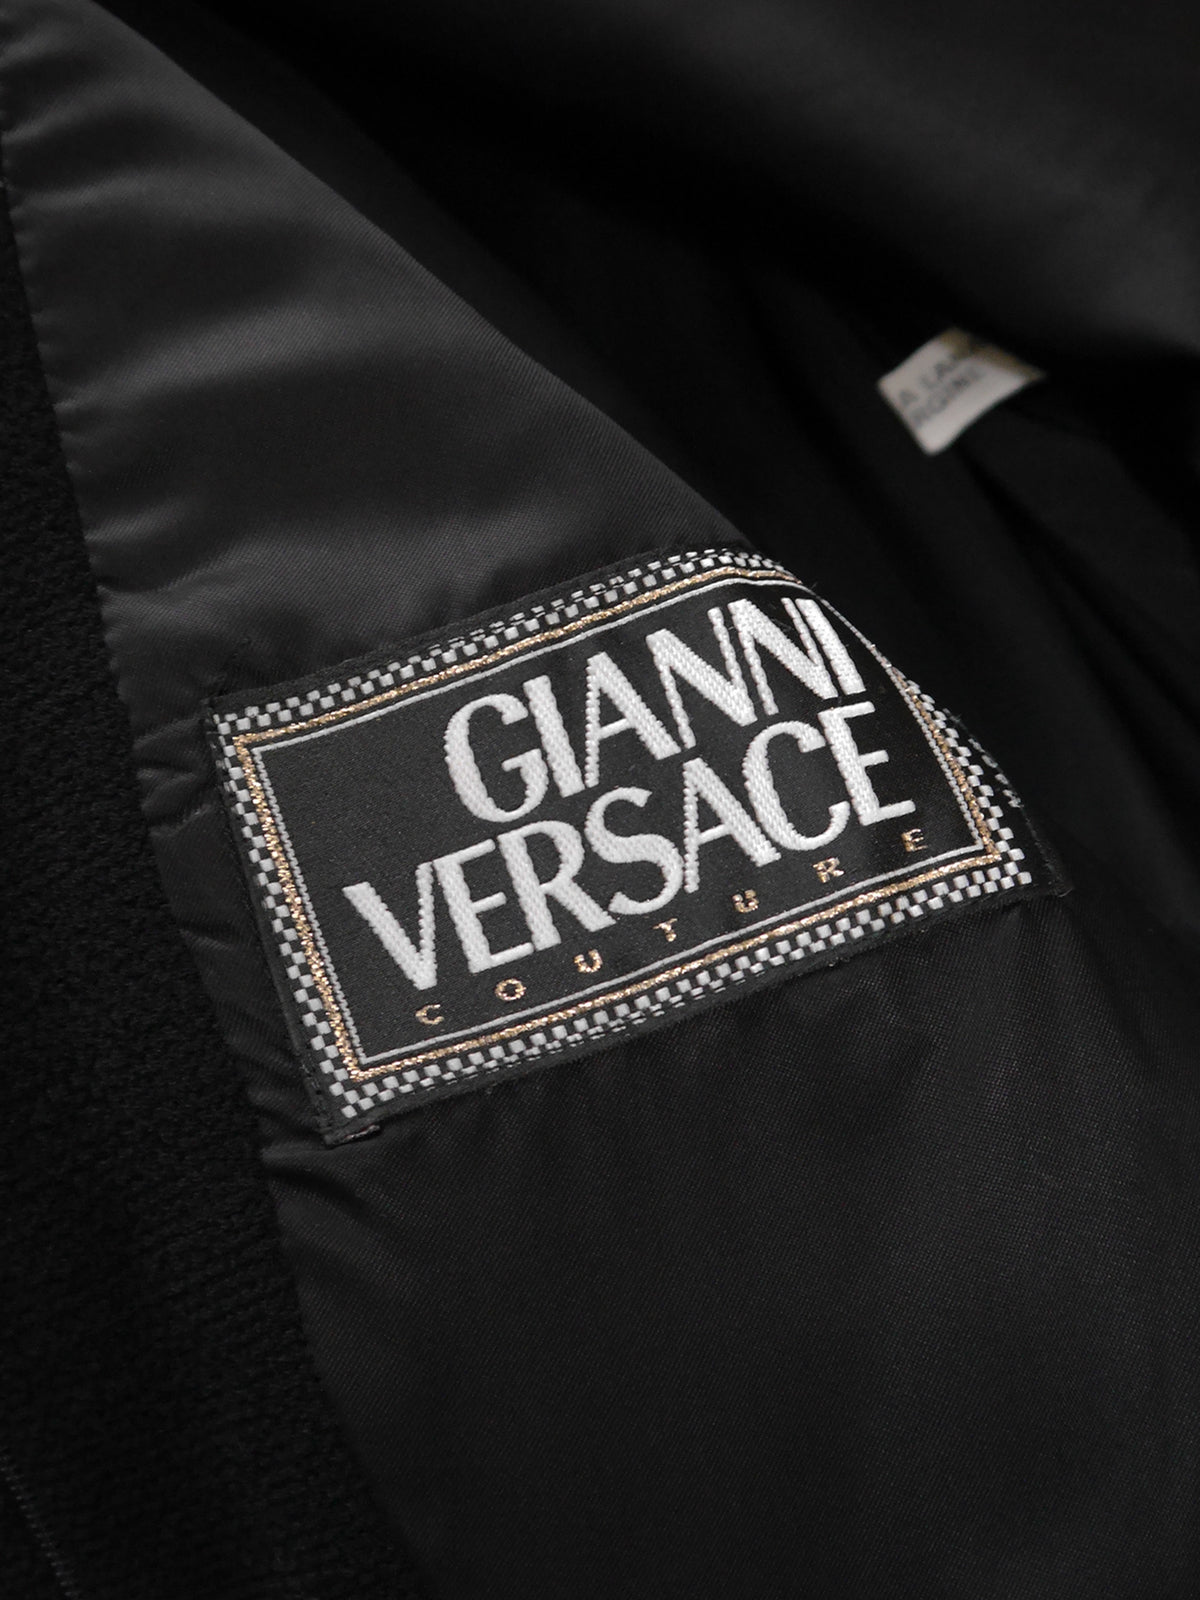 GIANNI VERSACE Couture Fall 1992 Vintage Bondage Jacket